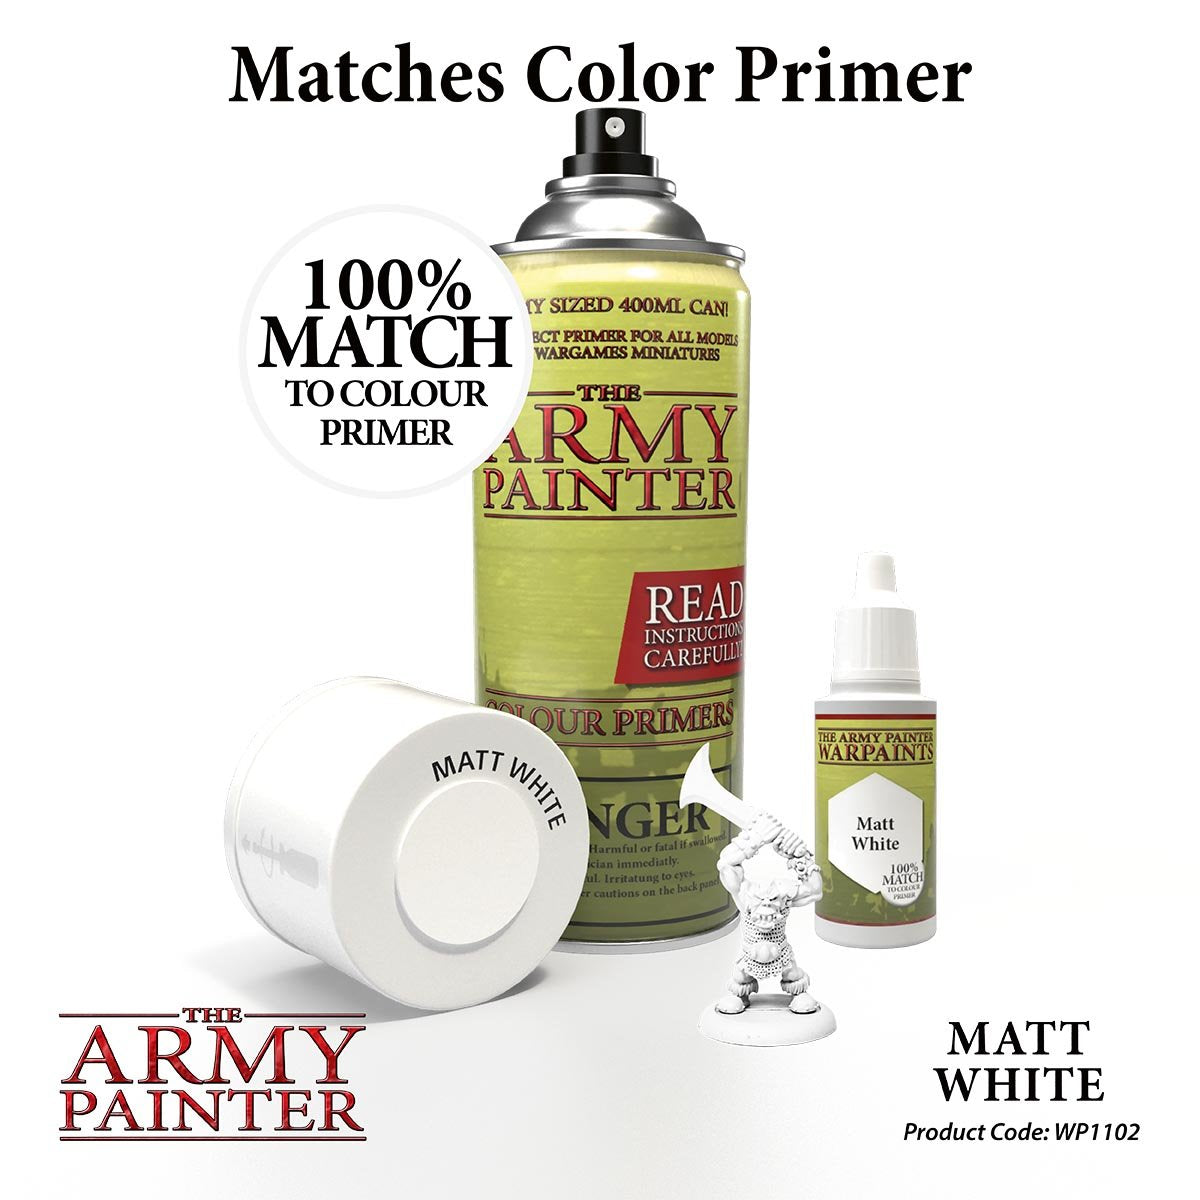 The Army Painter Warpaints WP1102 Matt White Acrylic Paint 18ml bottle